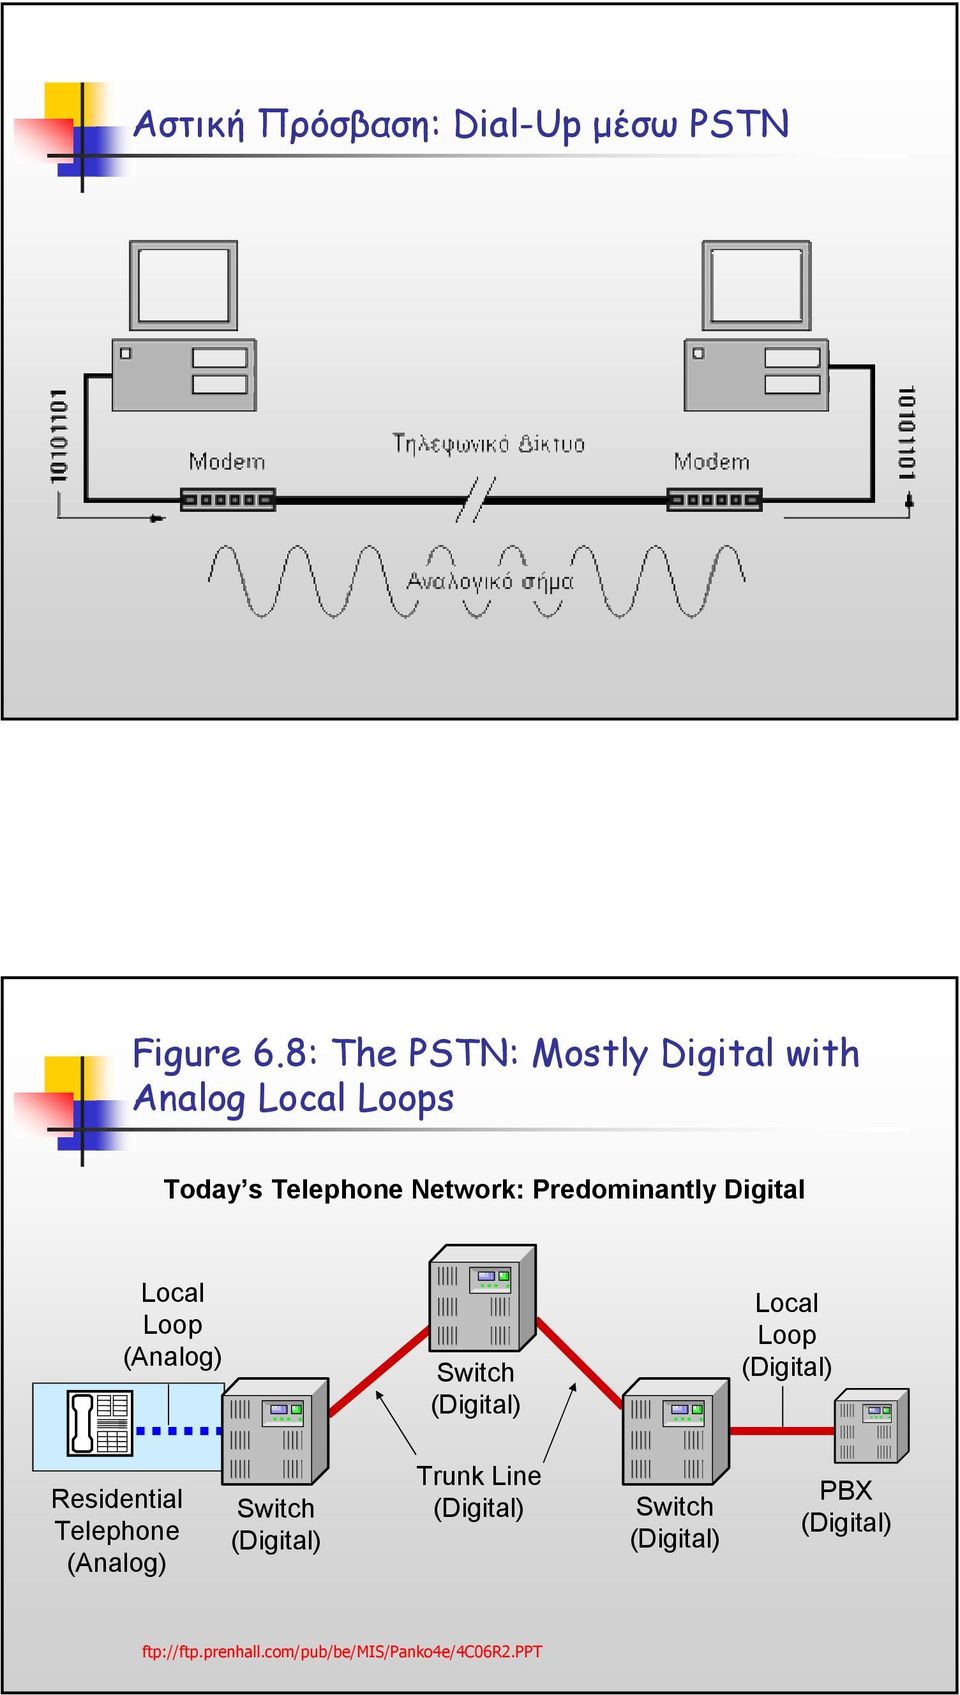 Predominantly Digital Local Loop (Analog) Switch (Digital) Local Loop (Digital)